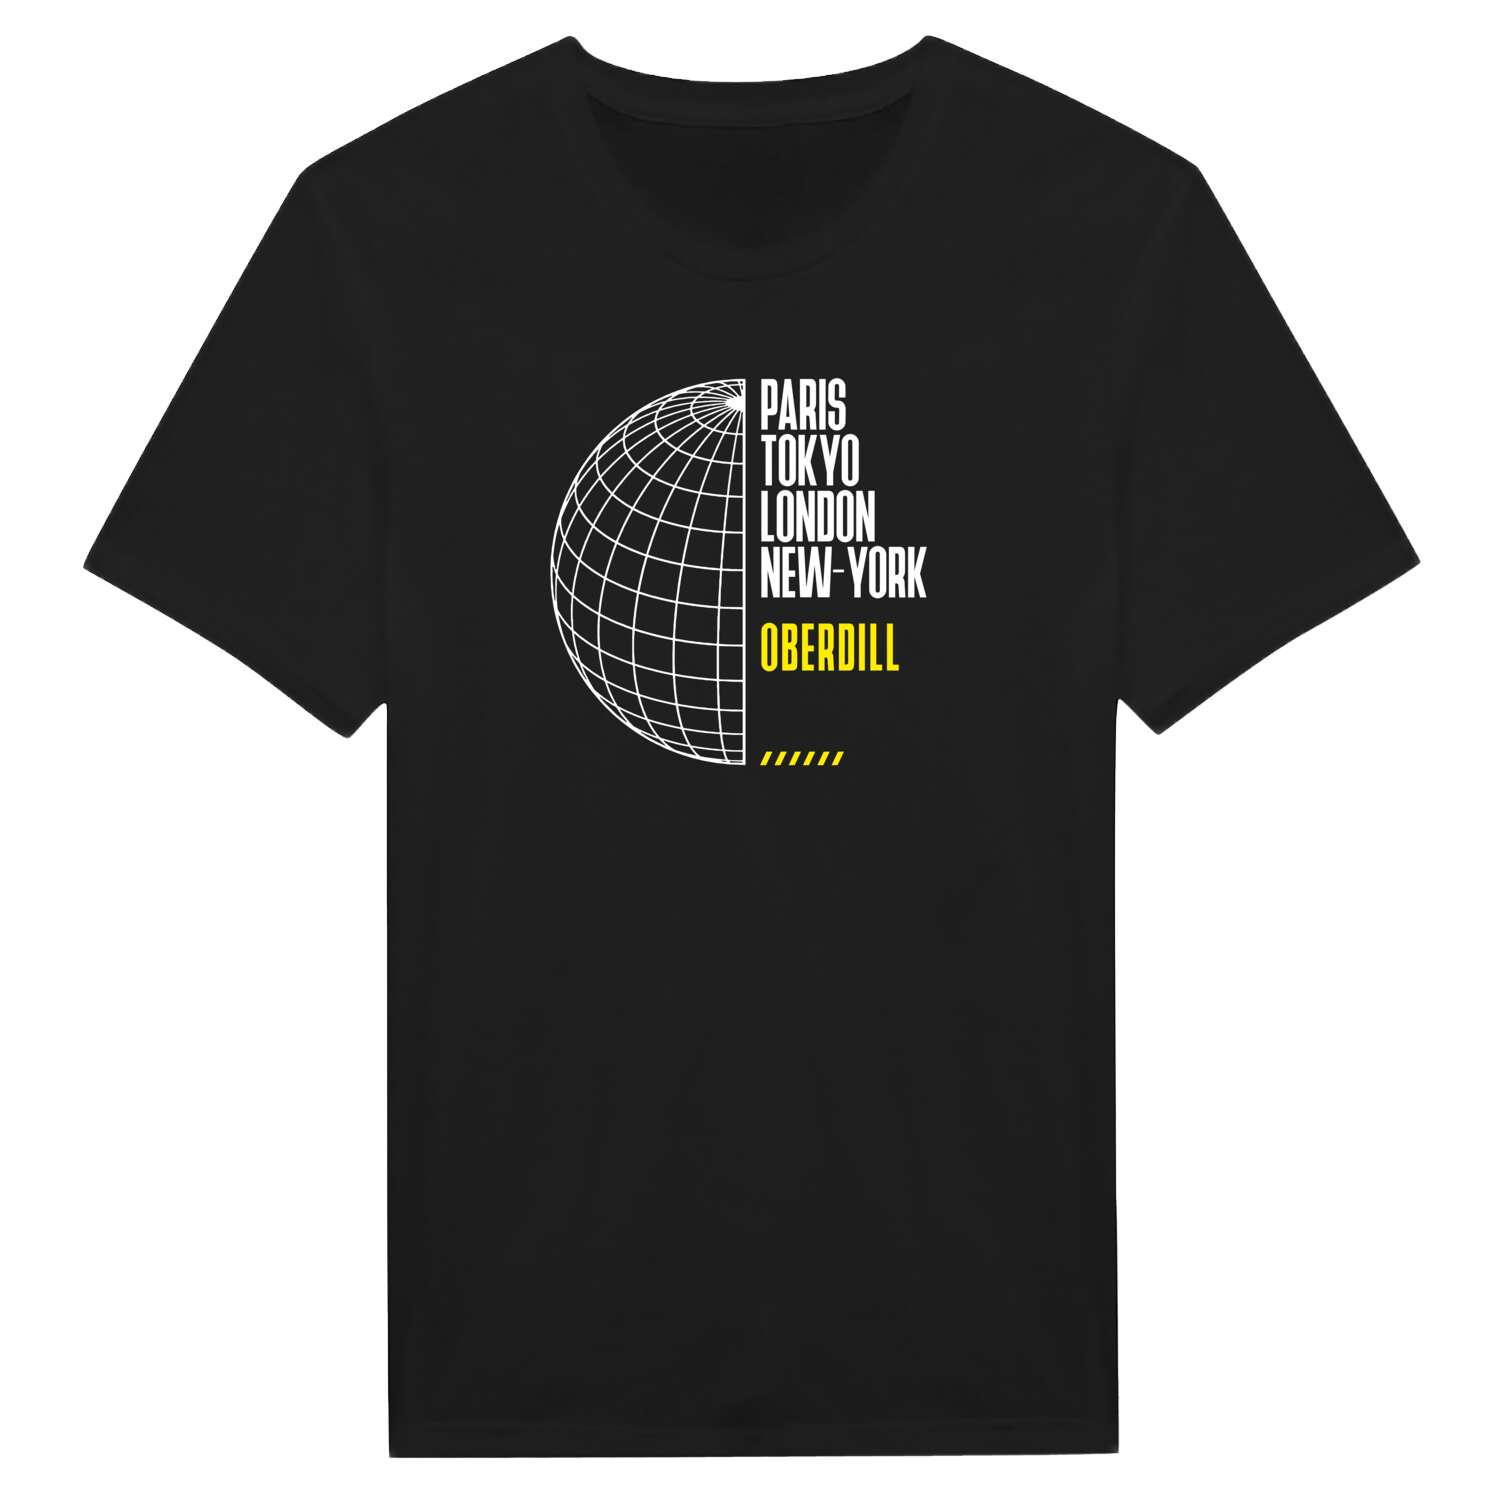 Oberdill T-Shirt »Paris Tokyo London«